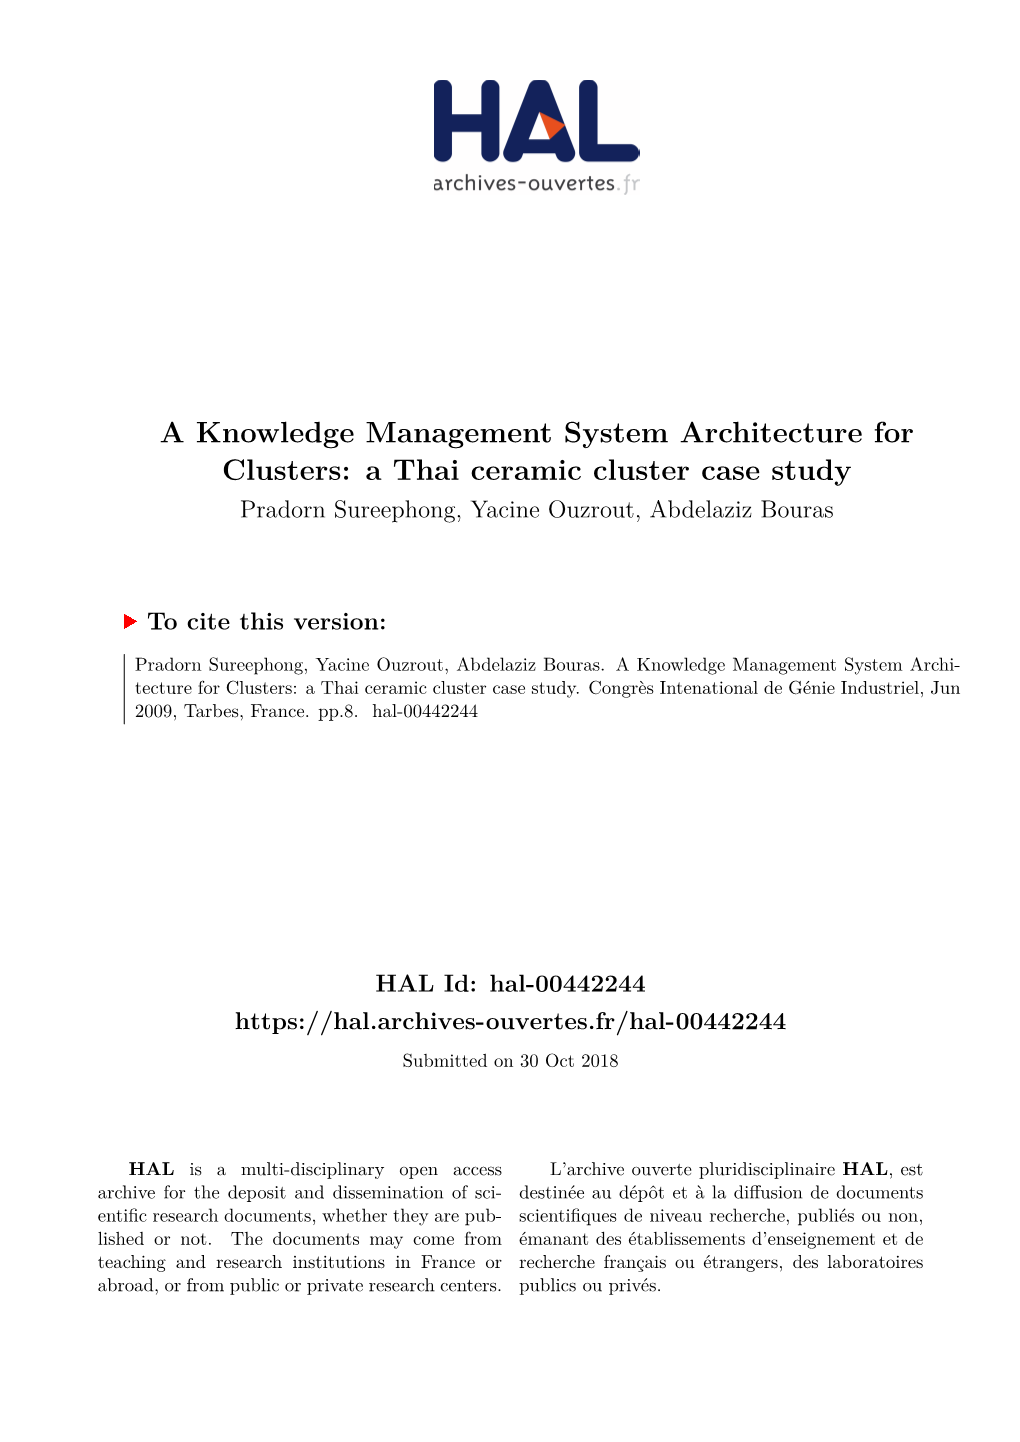 A Knowledge Management System Architecture for Clusters: a Thai Ceramic Cluster Case Study Pradorn Sureephong, Yacine Ouzrout, Abdelaziz Bouras